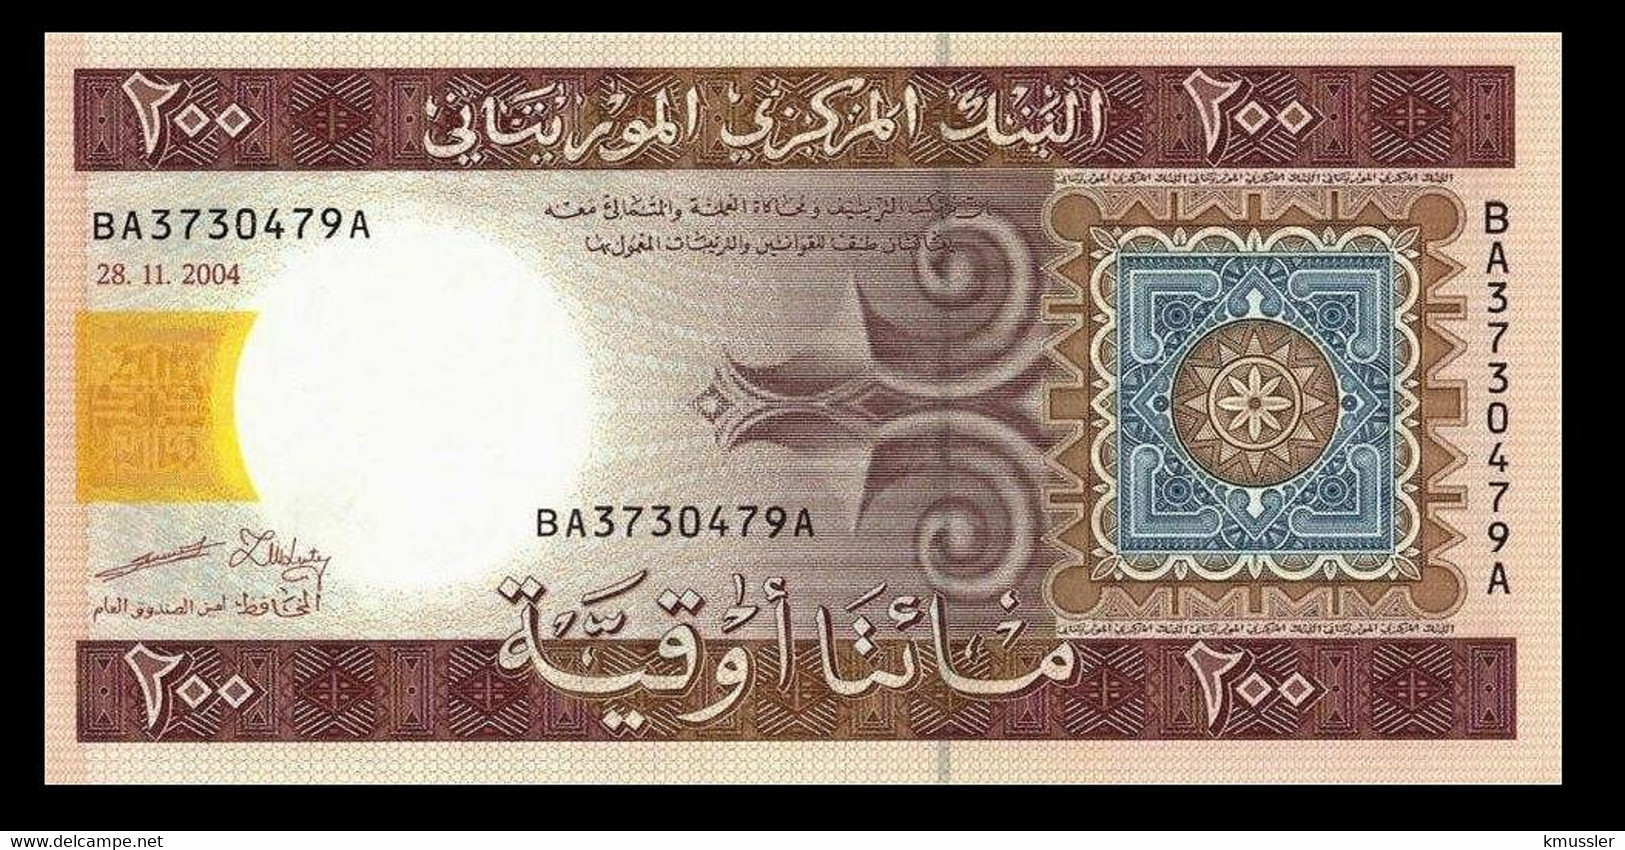 # # # Banknote Mauritanien (Mauritania) 200 Ouguiya 2004 UNC # # # - Mauritania